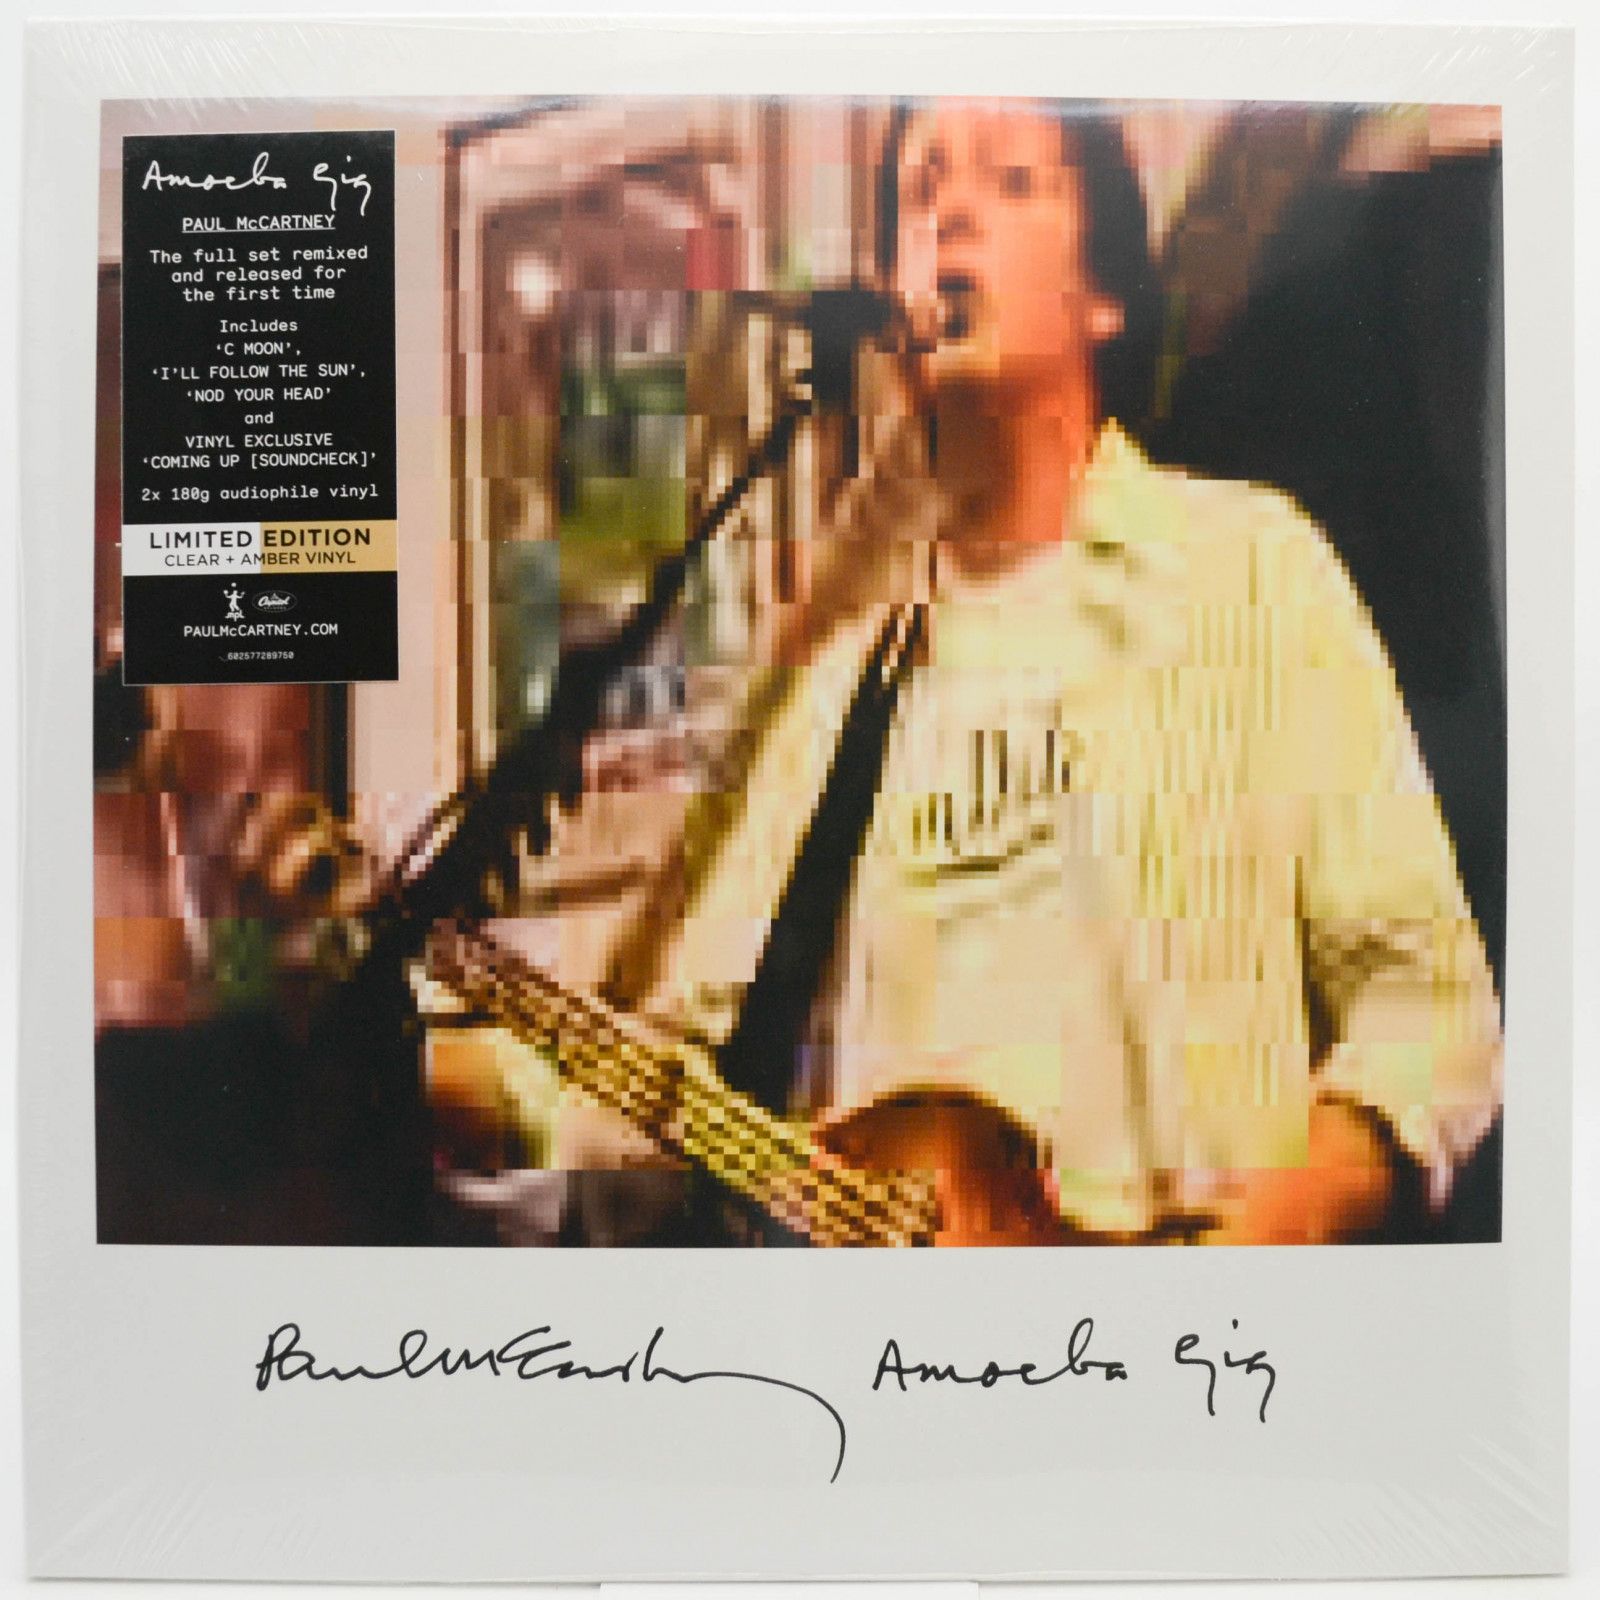 Paul McCartney — Amoeba Gig (2LP), 2019